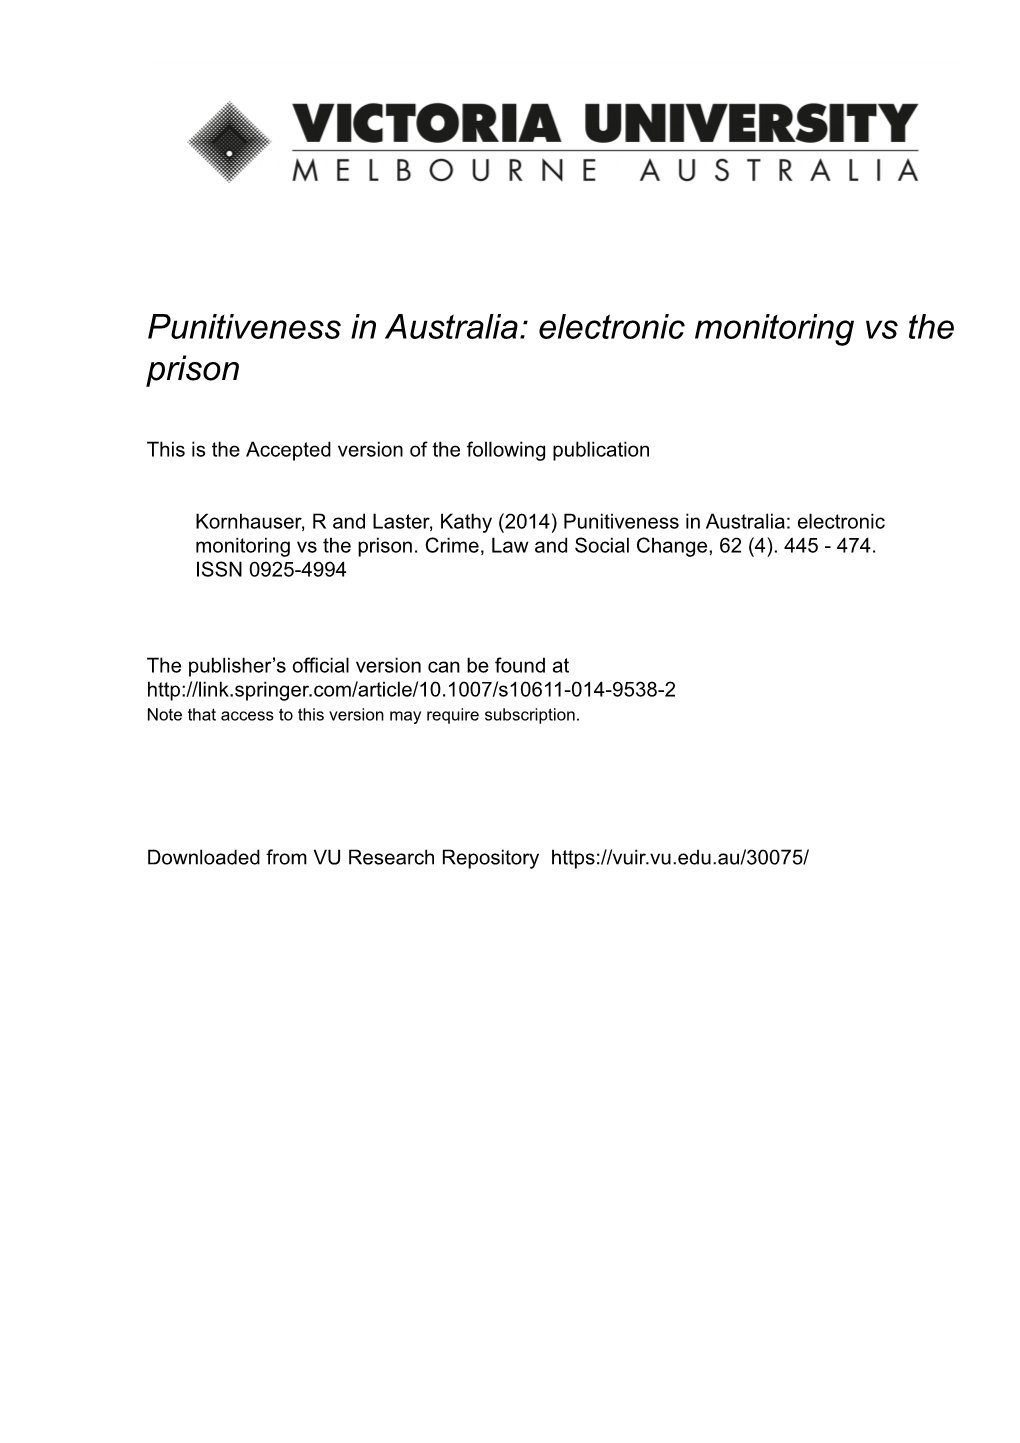 Punitiveness in Australia: Electronic Monitoring Vs the Prison1